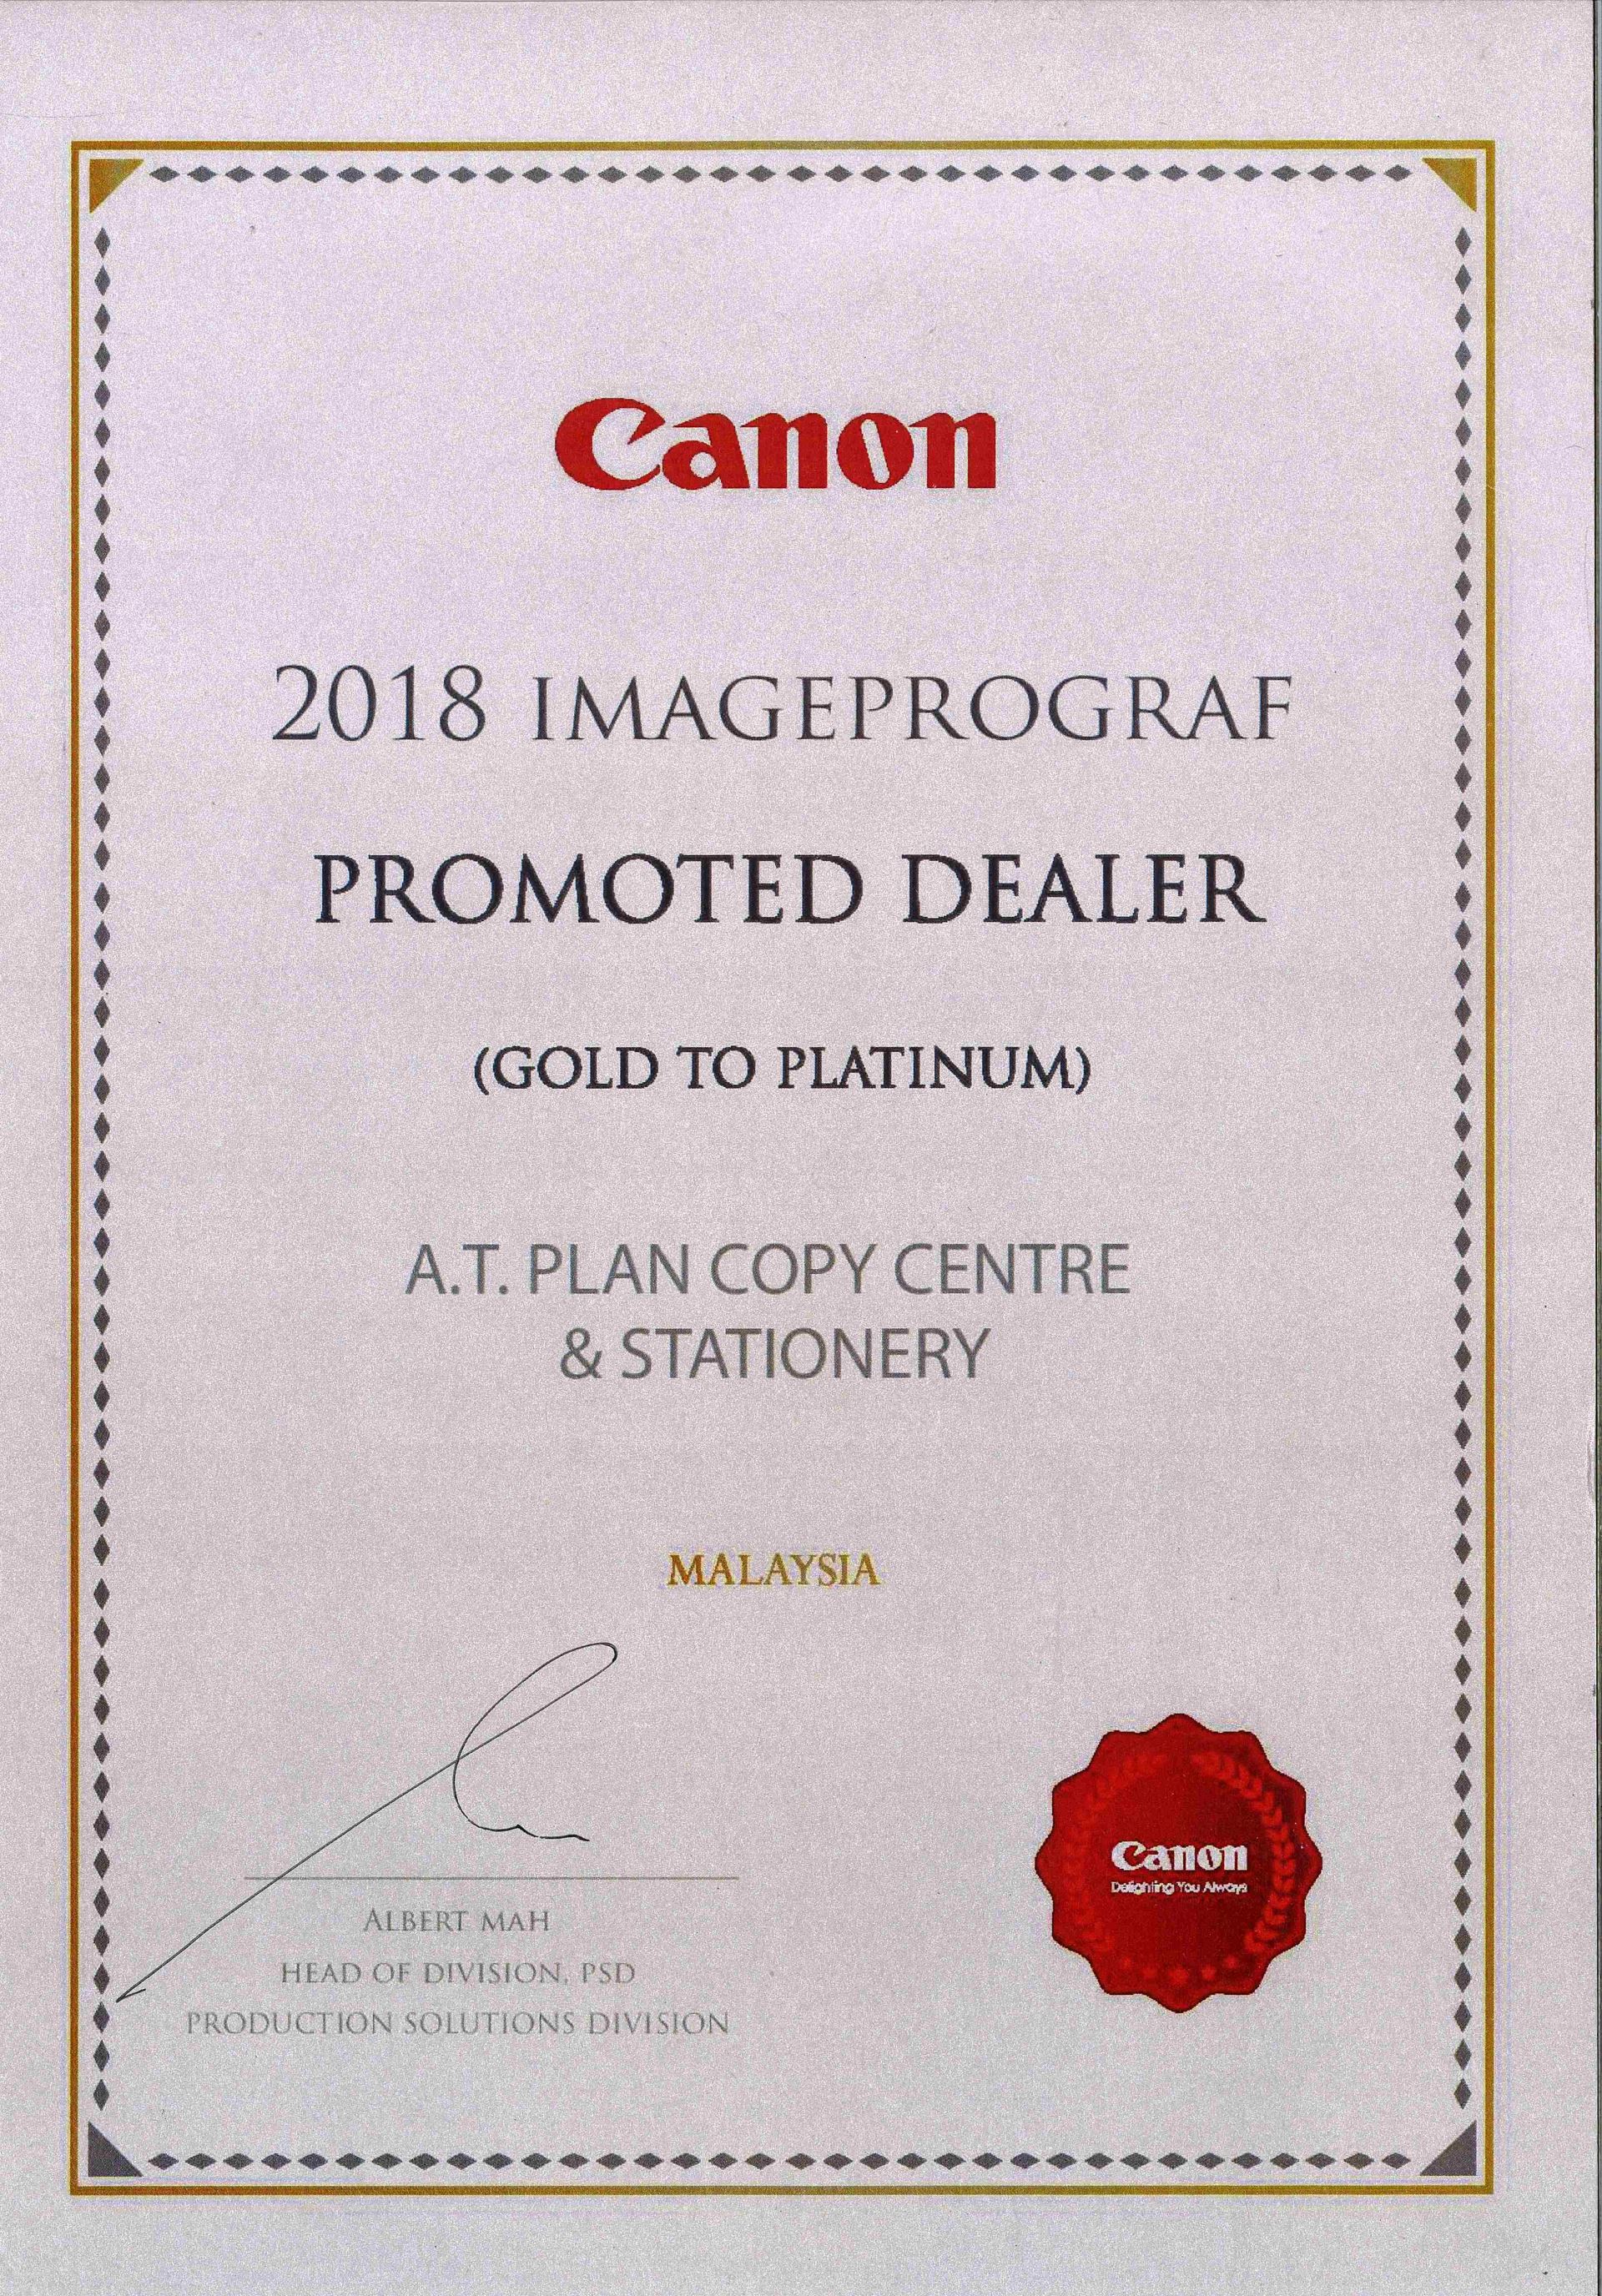 Certificate of Canon ImagePROGRAF Platinum Partner